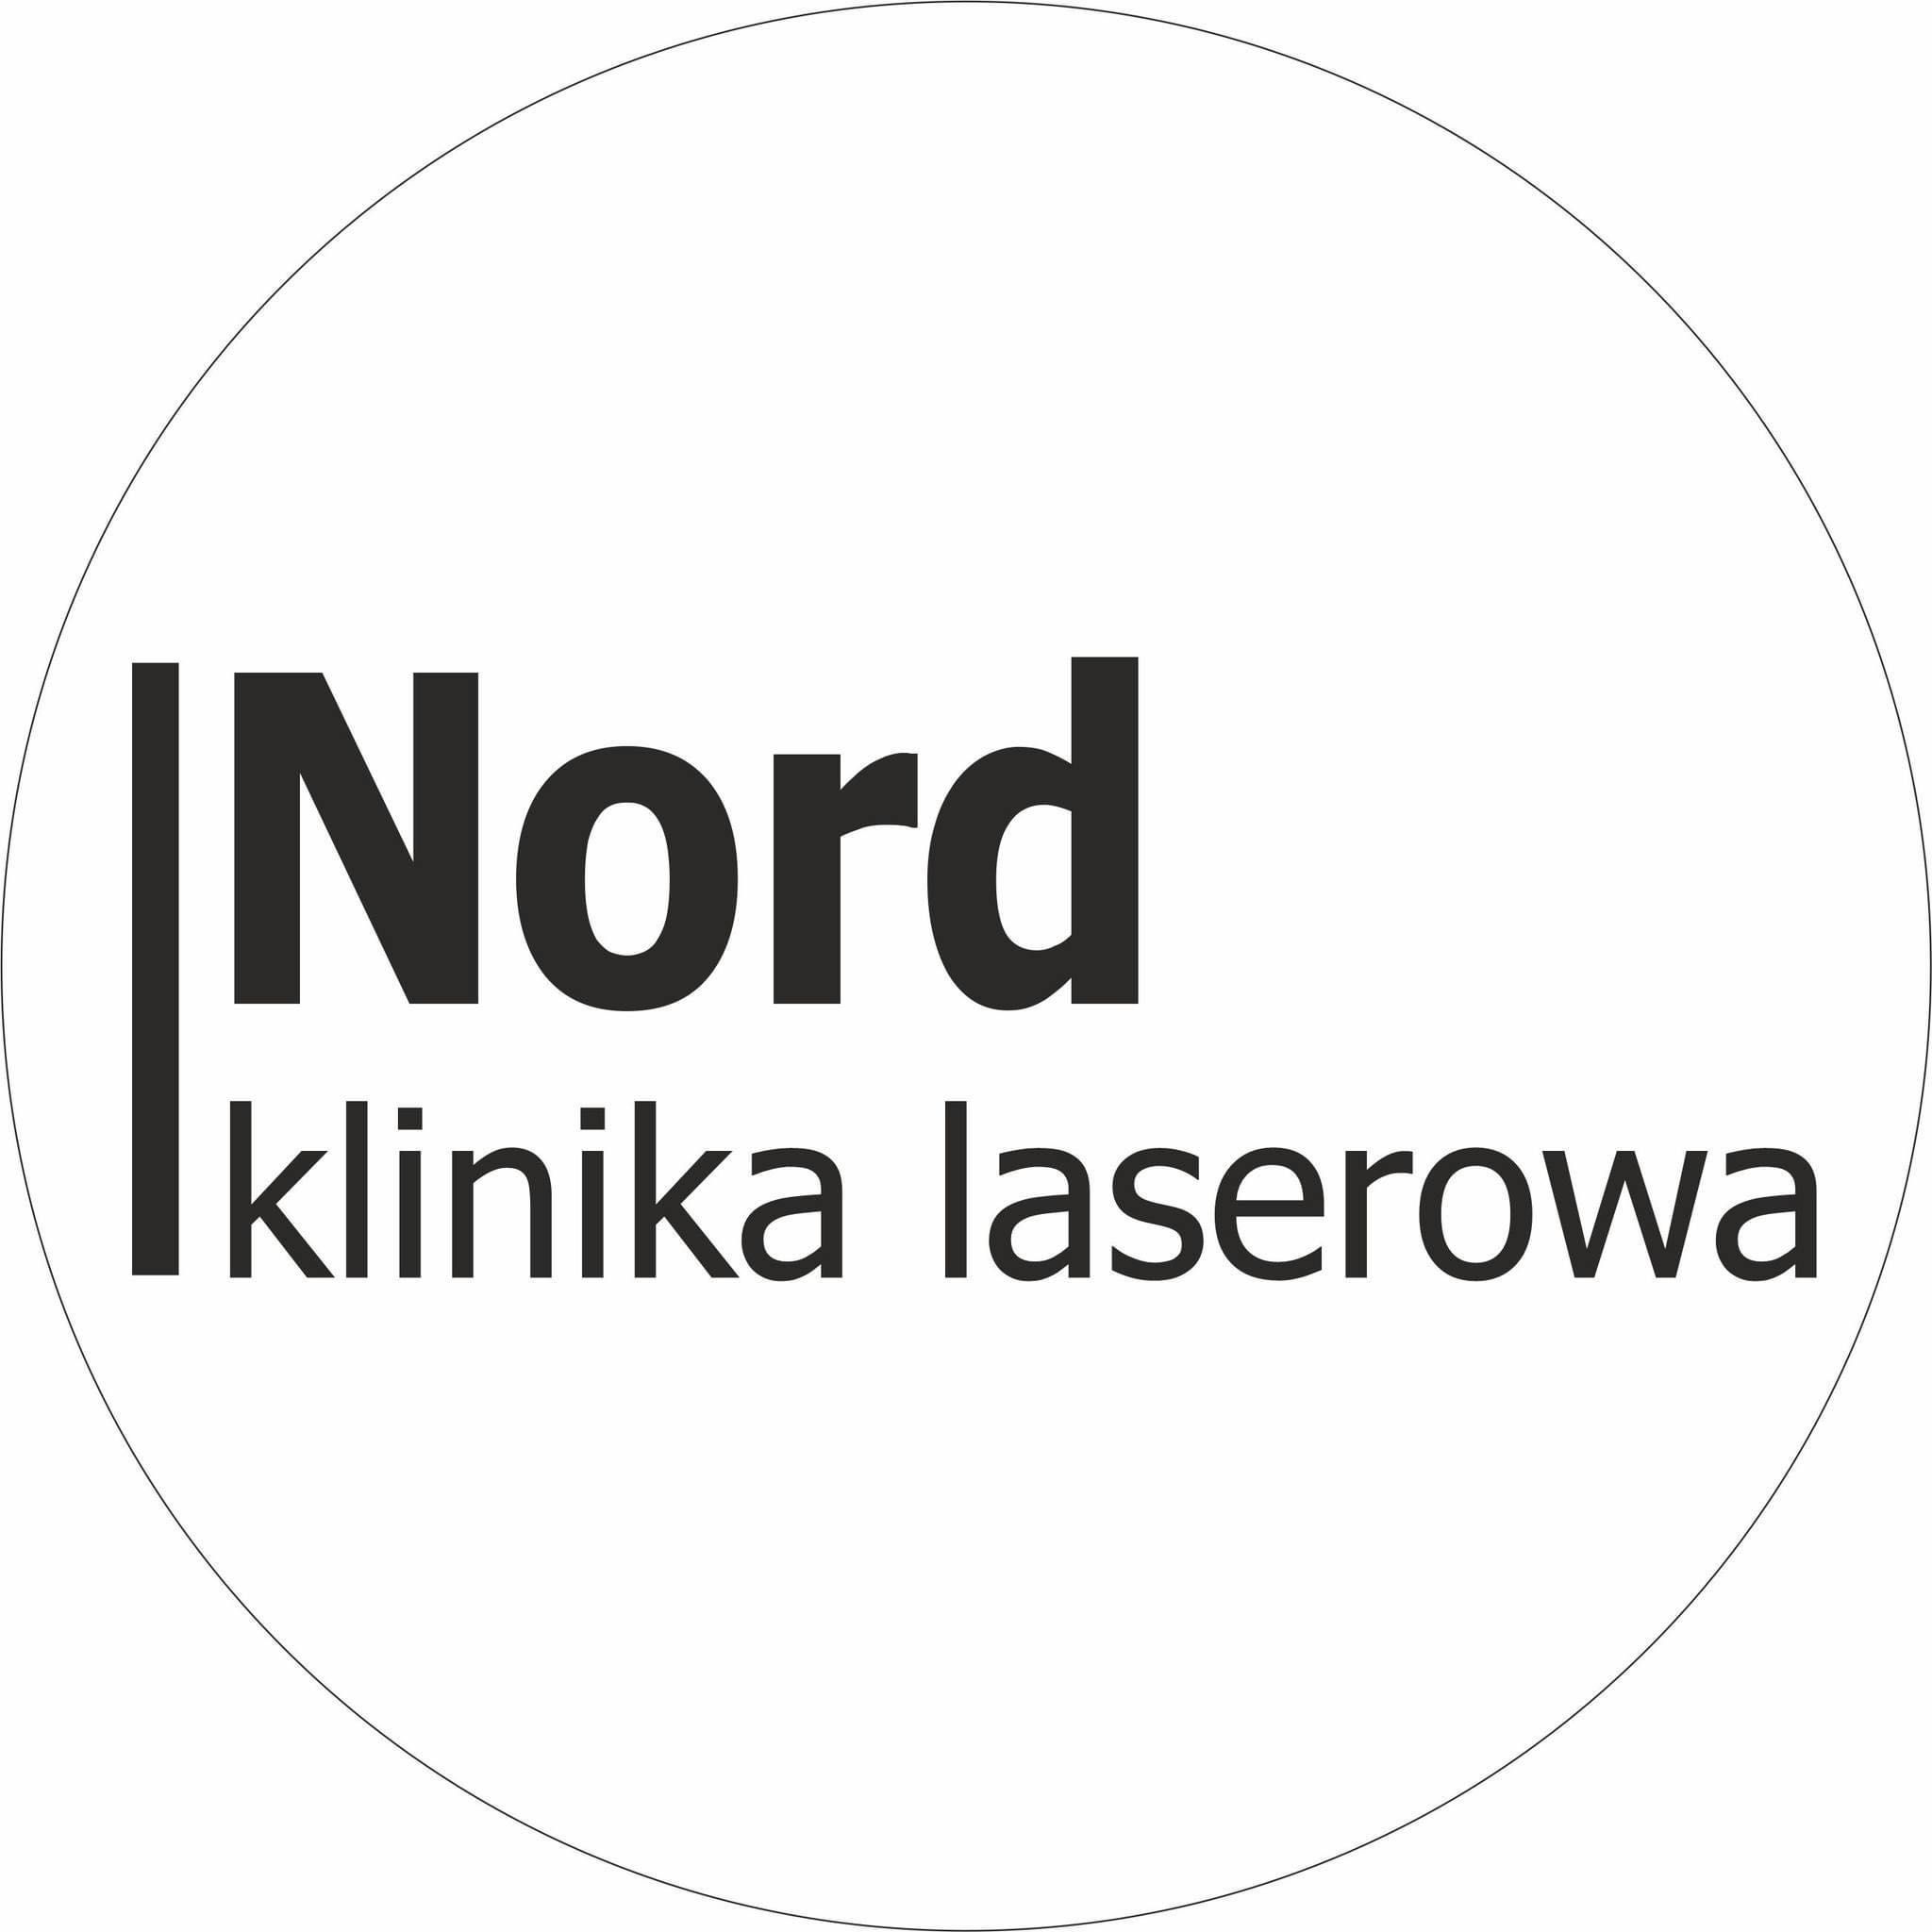 Nord Klinika Laserowa, Puławska 77, 02-595, Warszawa, Mokotów